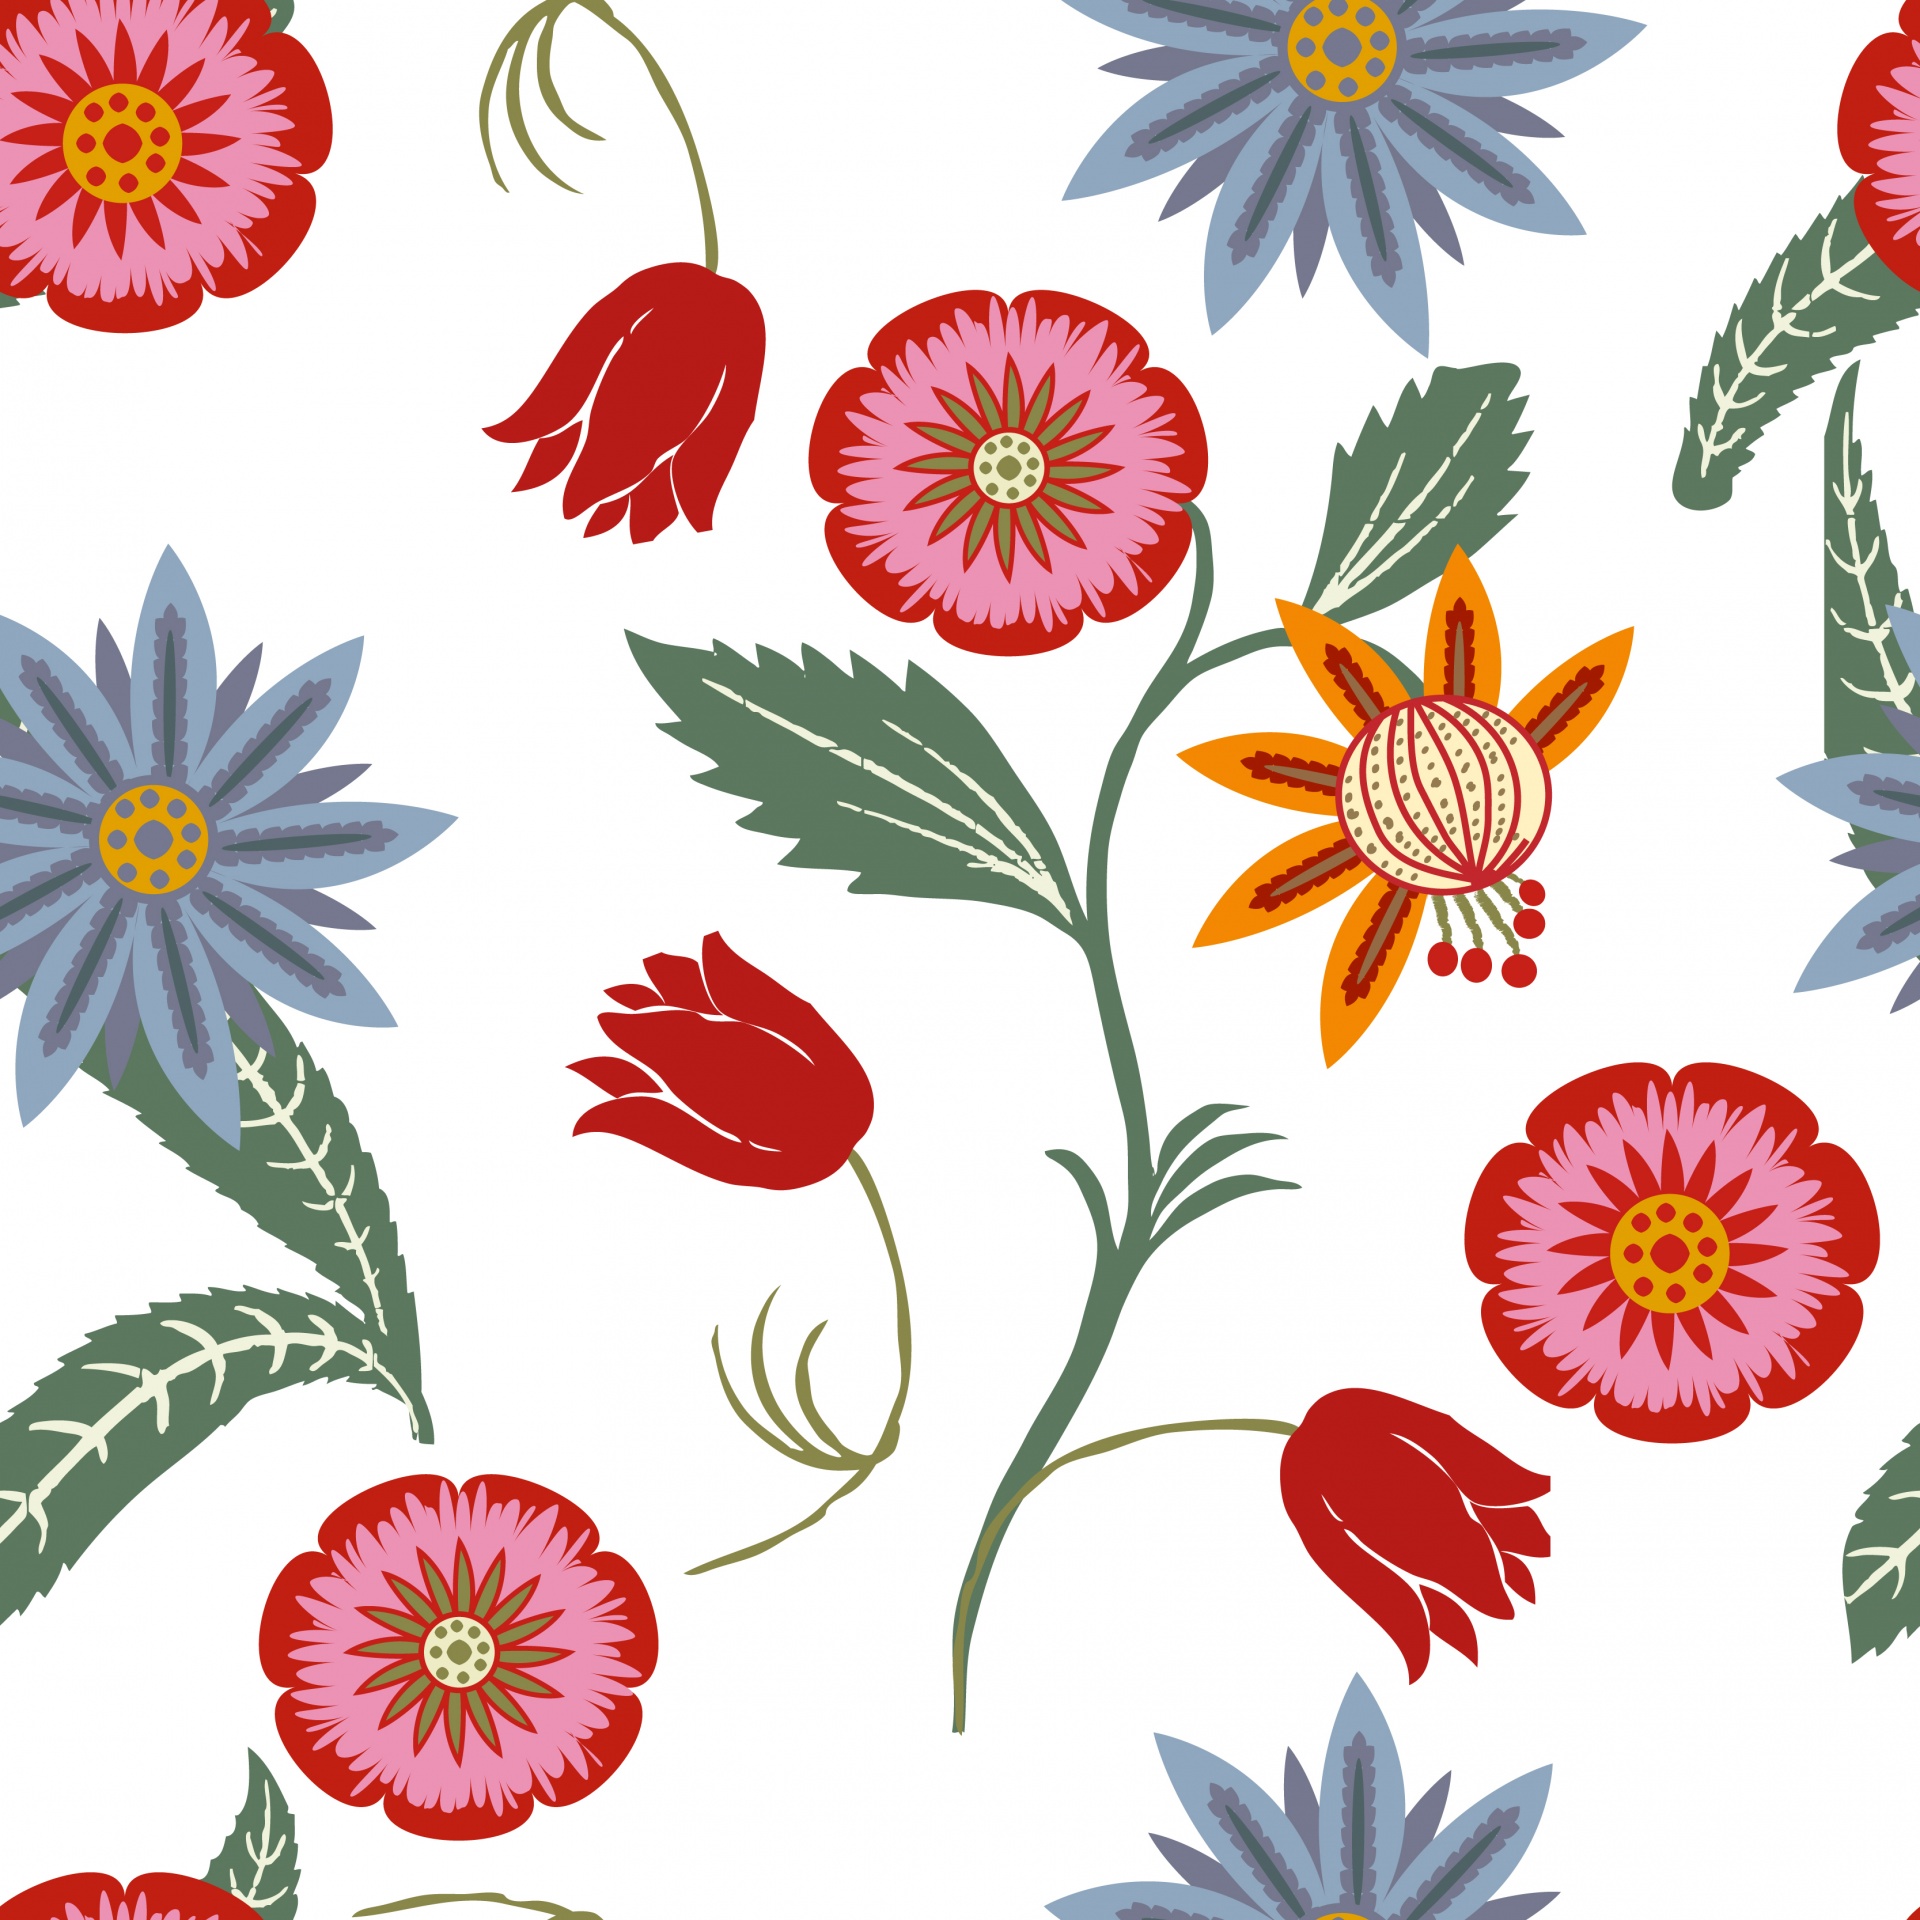 Floral Wallpaper Background Pattern